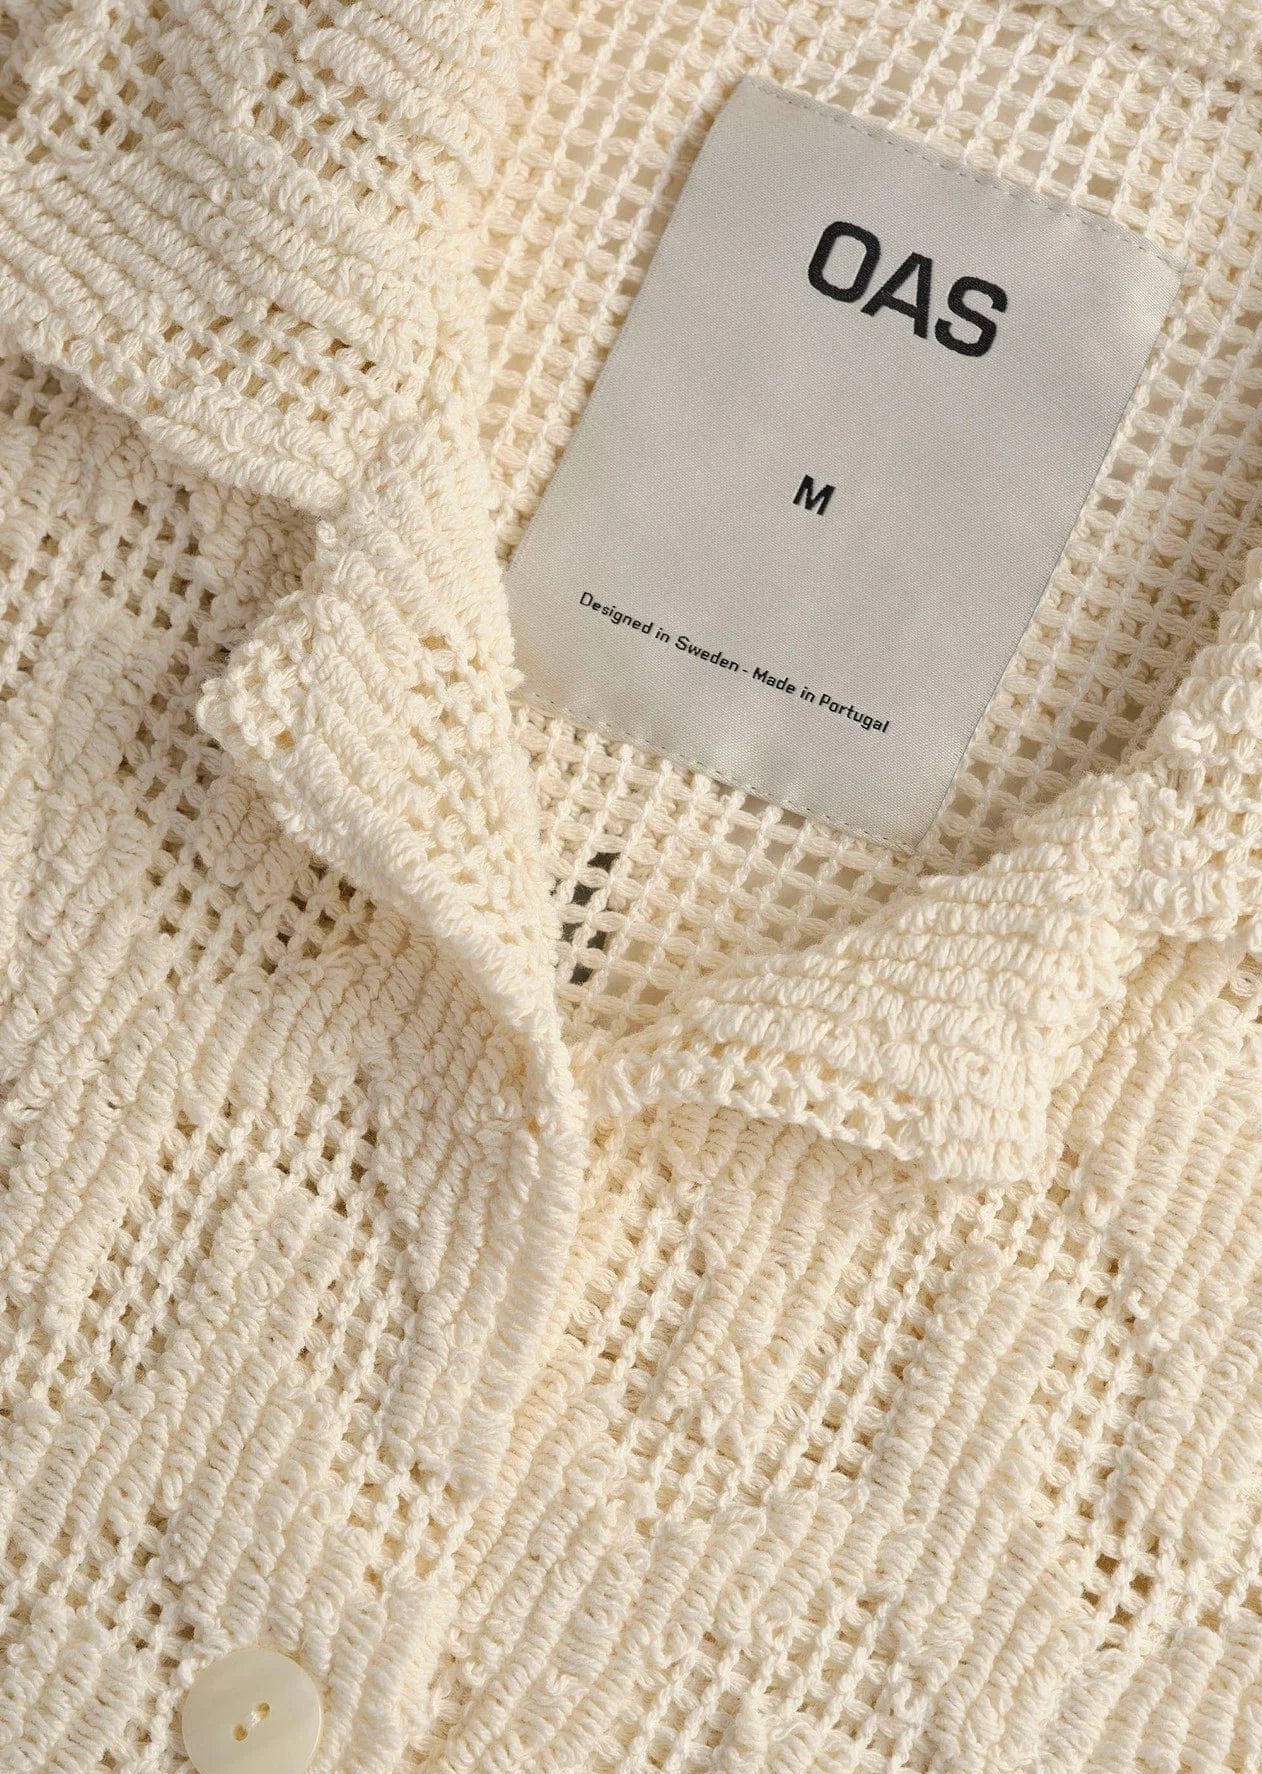 OAS Chemises Chemise OAS - Atlas Cuba Crochet Shirt